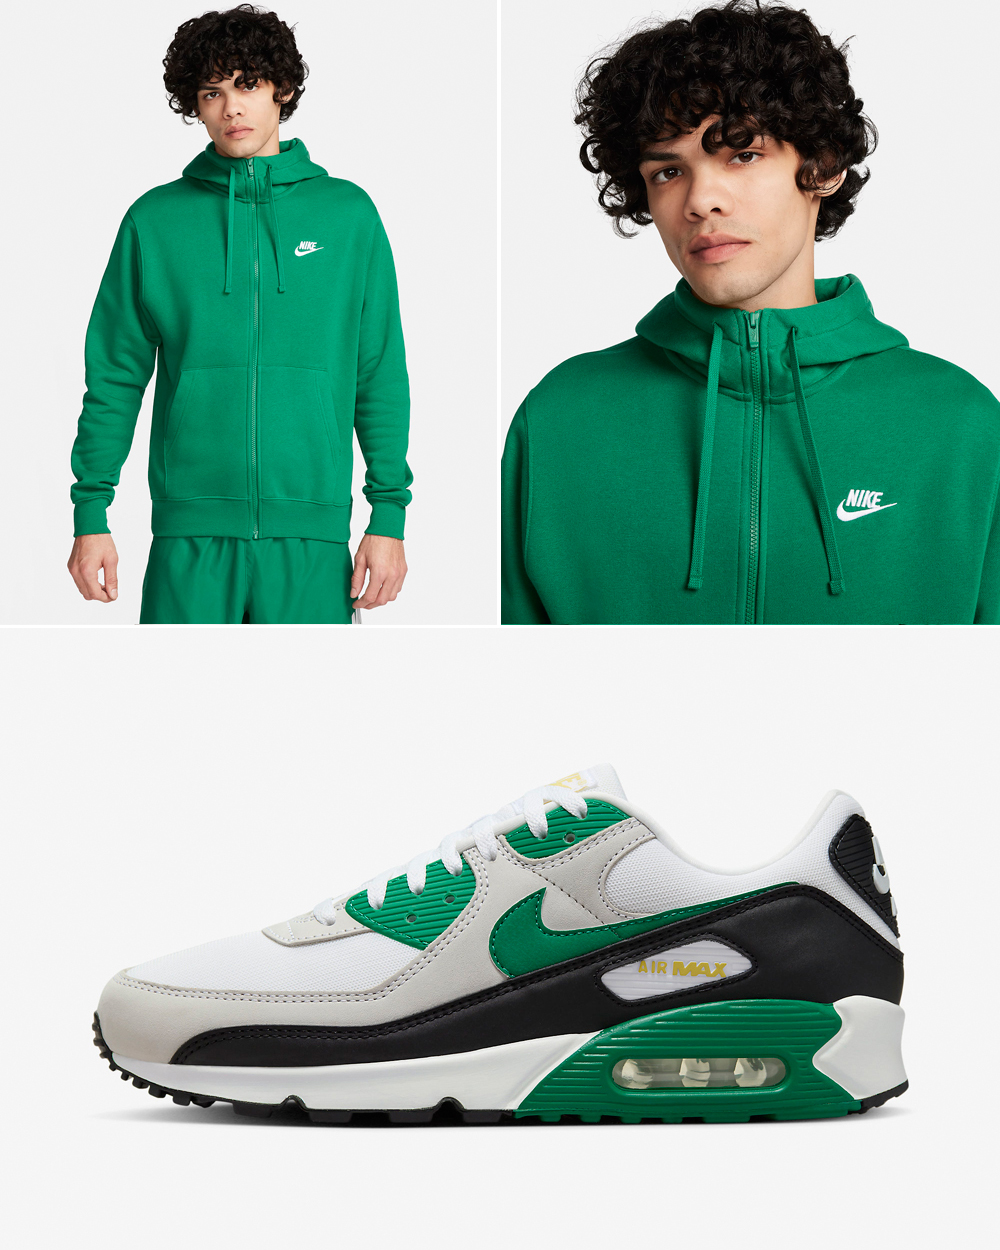 Nike-Air-Max-90-Malachite-Zip-Hoodie-Match-Outfit